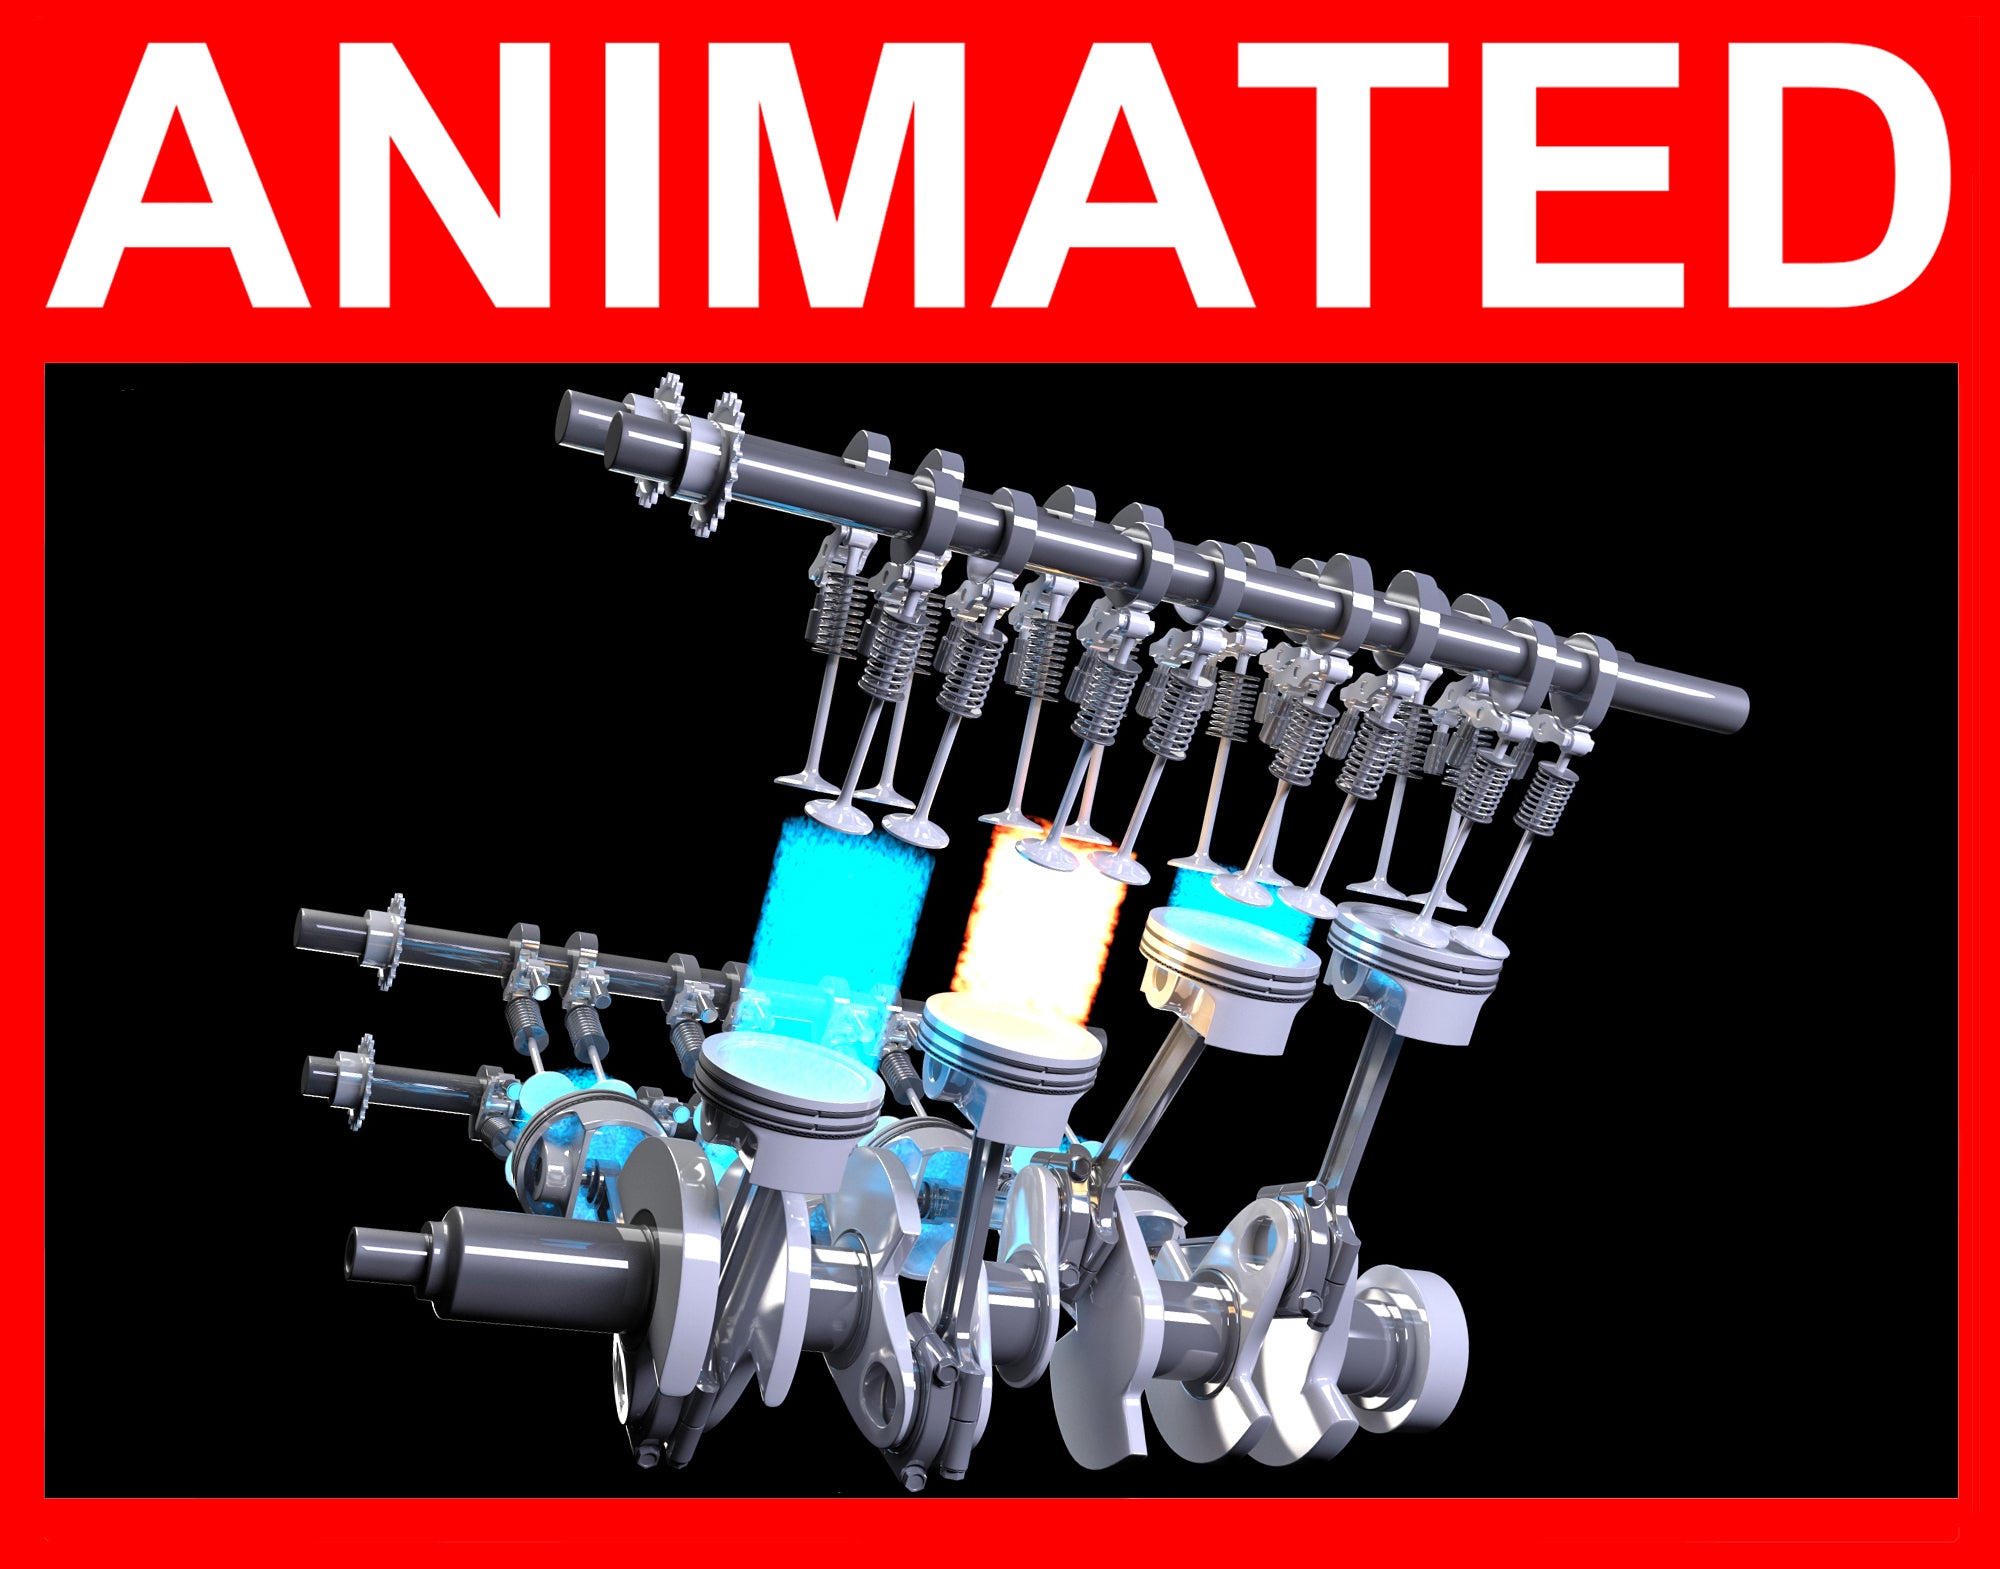 Animated V8 Engine Gasoline Ignition